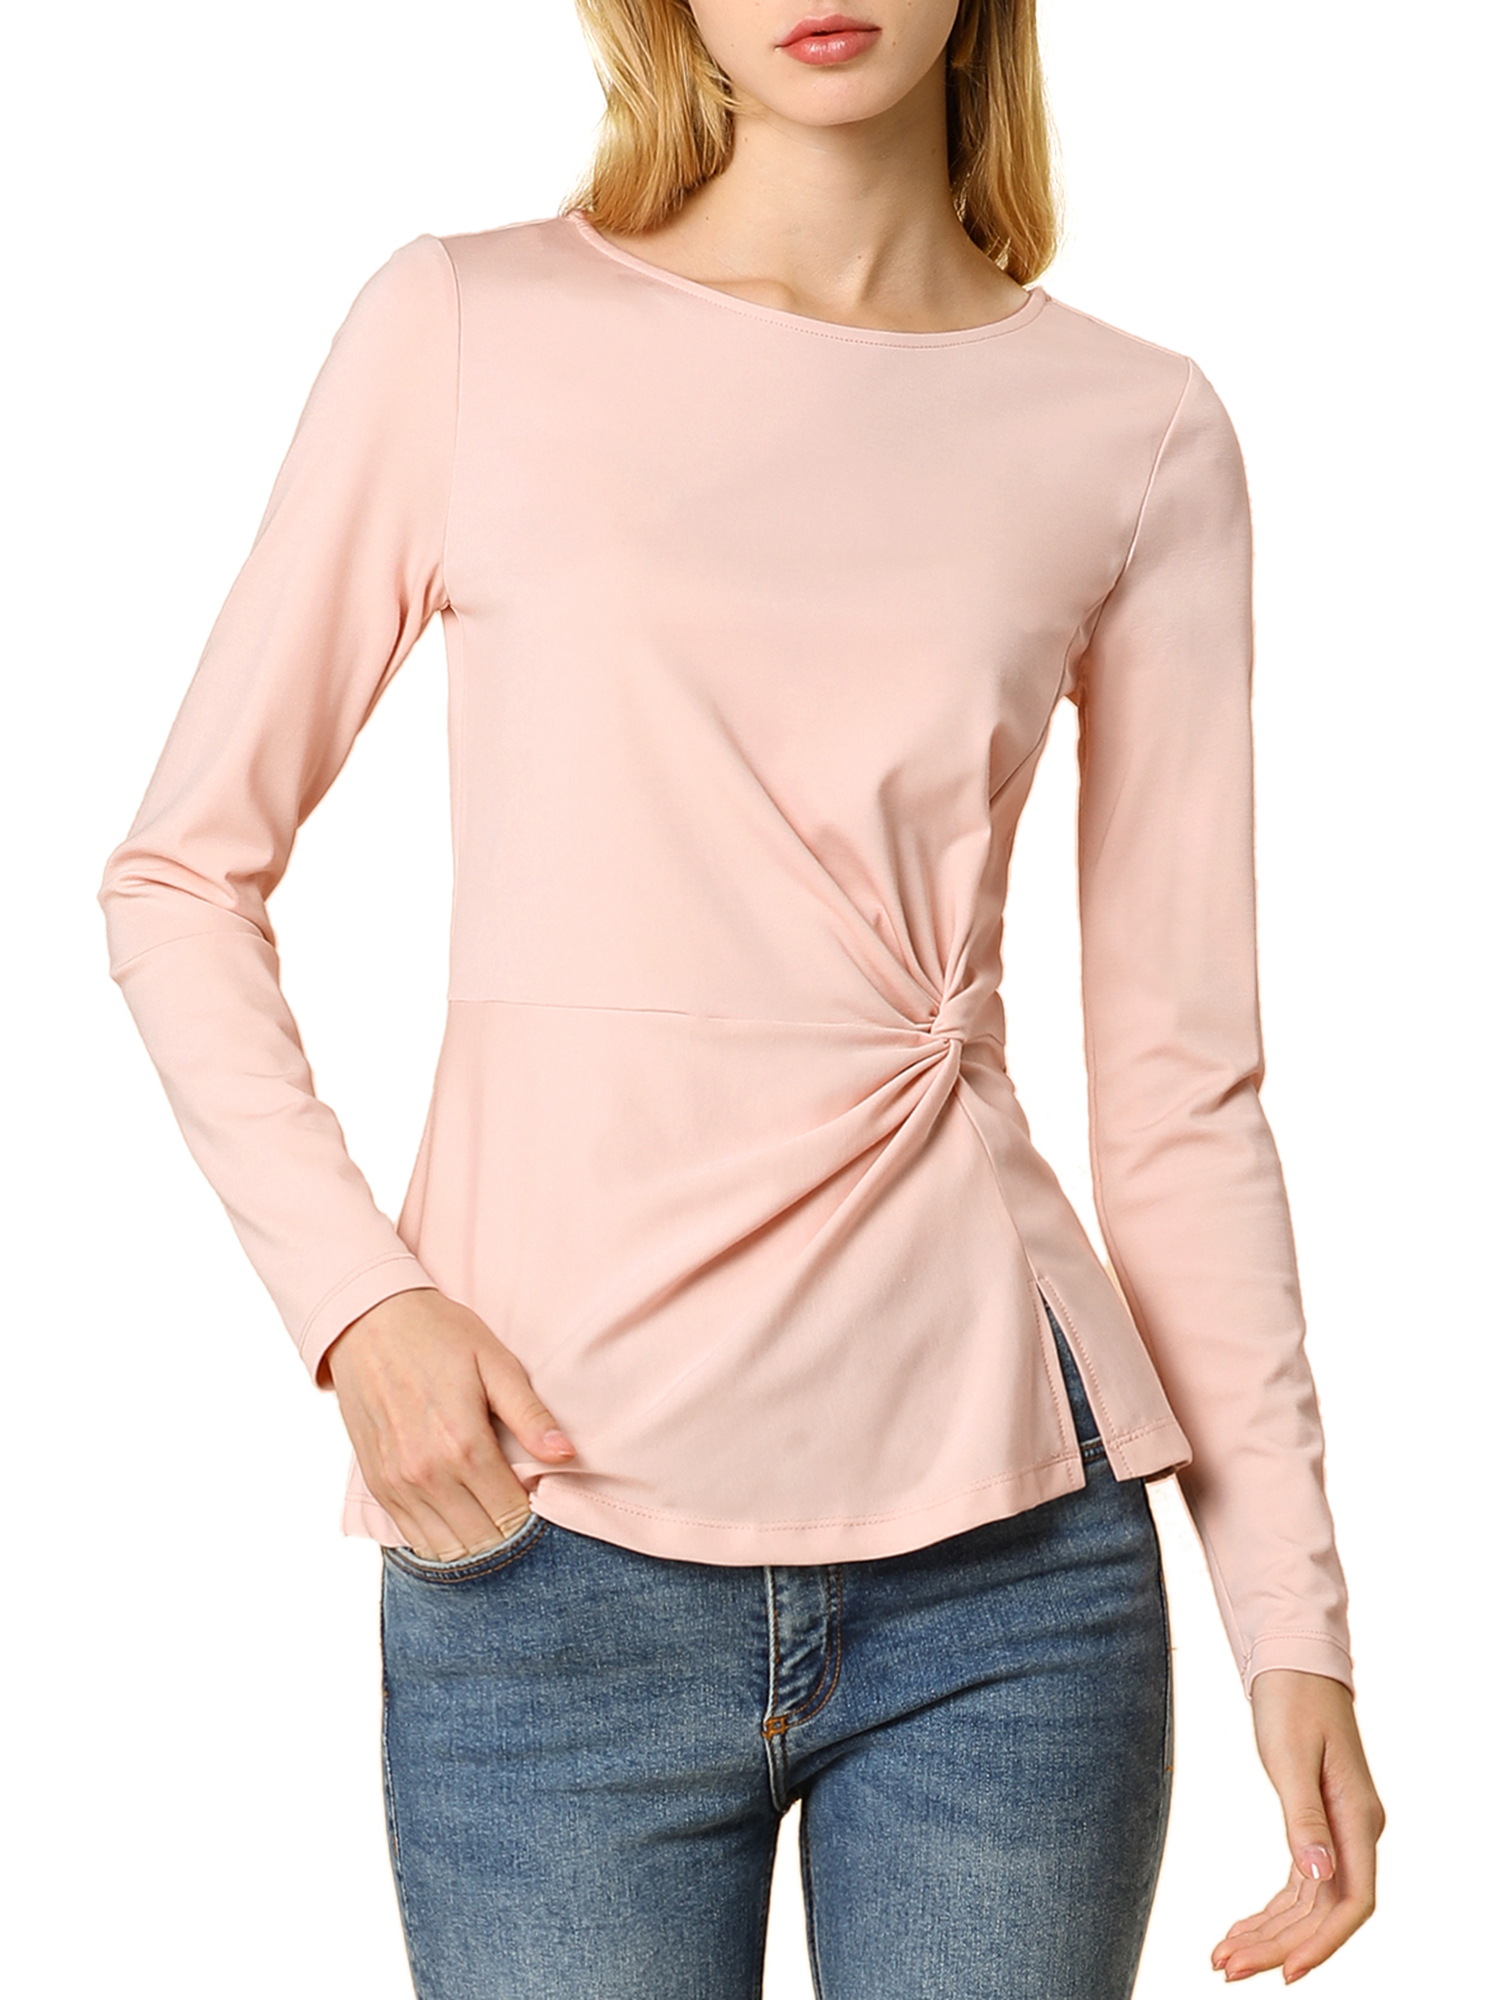 MODA NOVA Junior's Round Neck Tops Long Sleeve Blouse Shirt Pink M - image 2 of 6